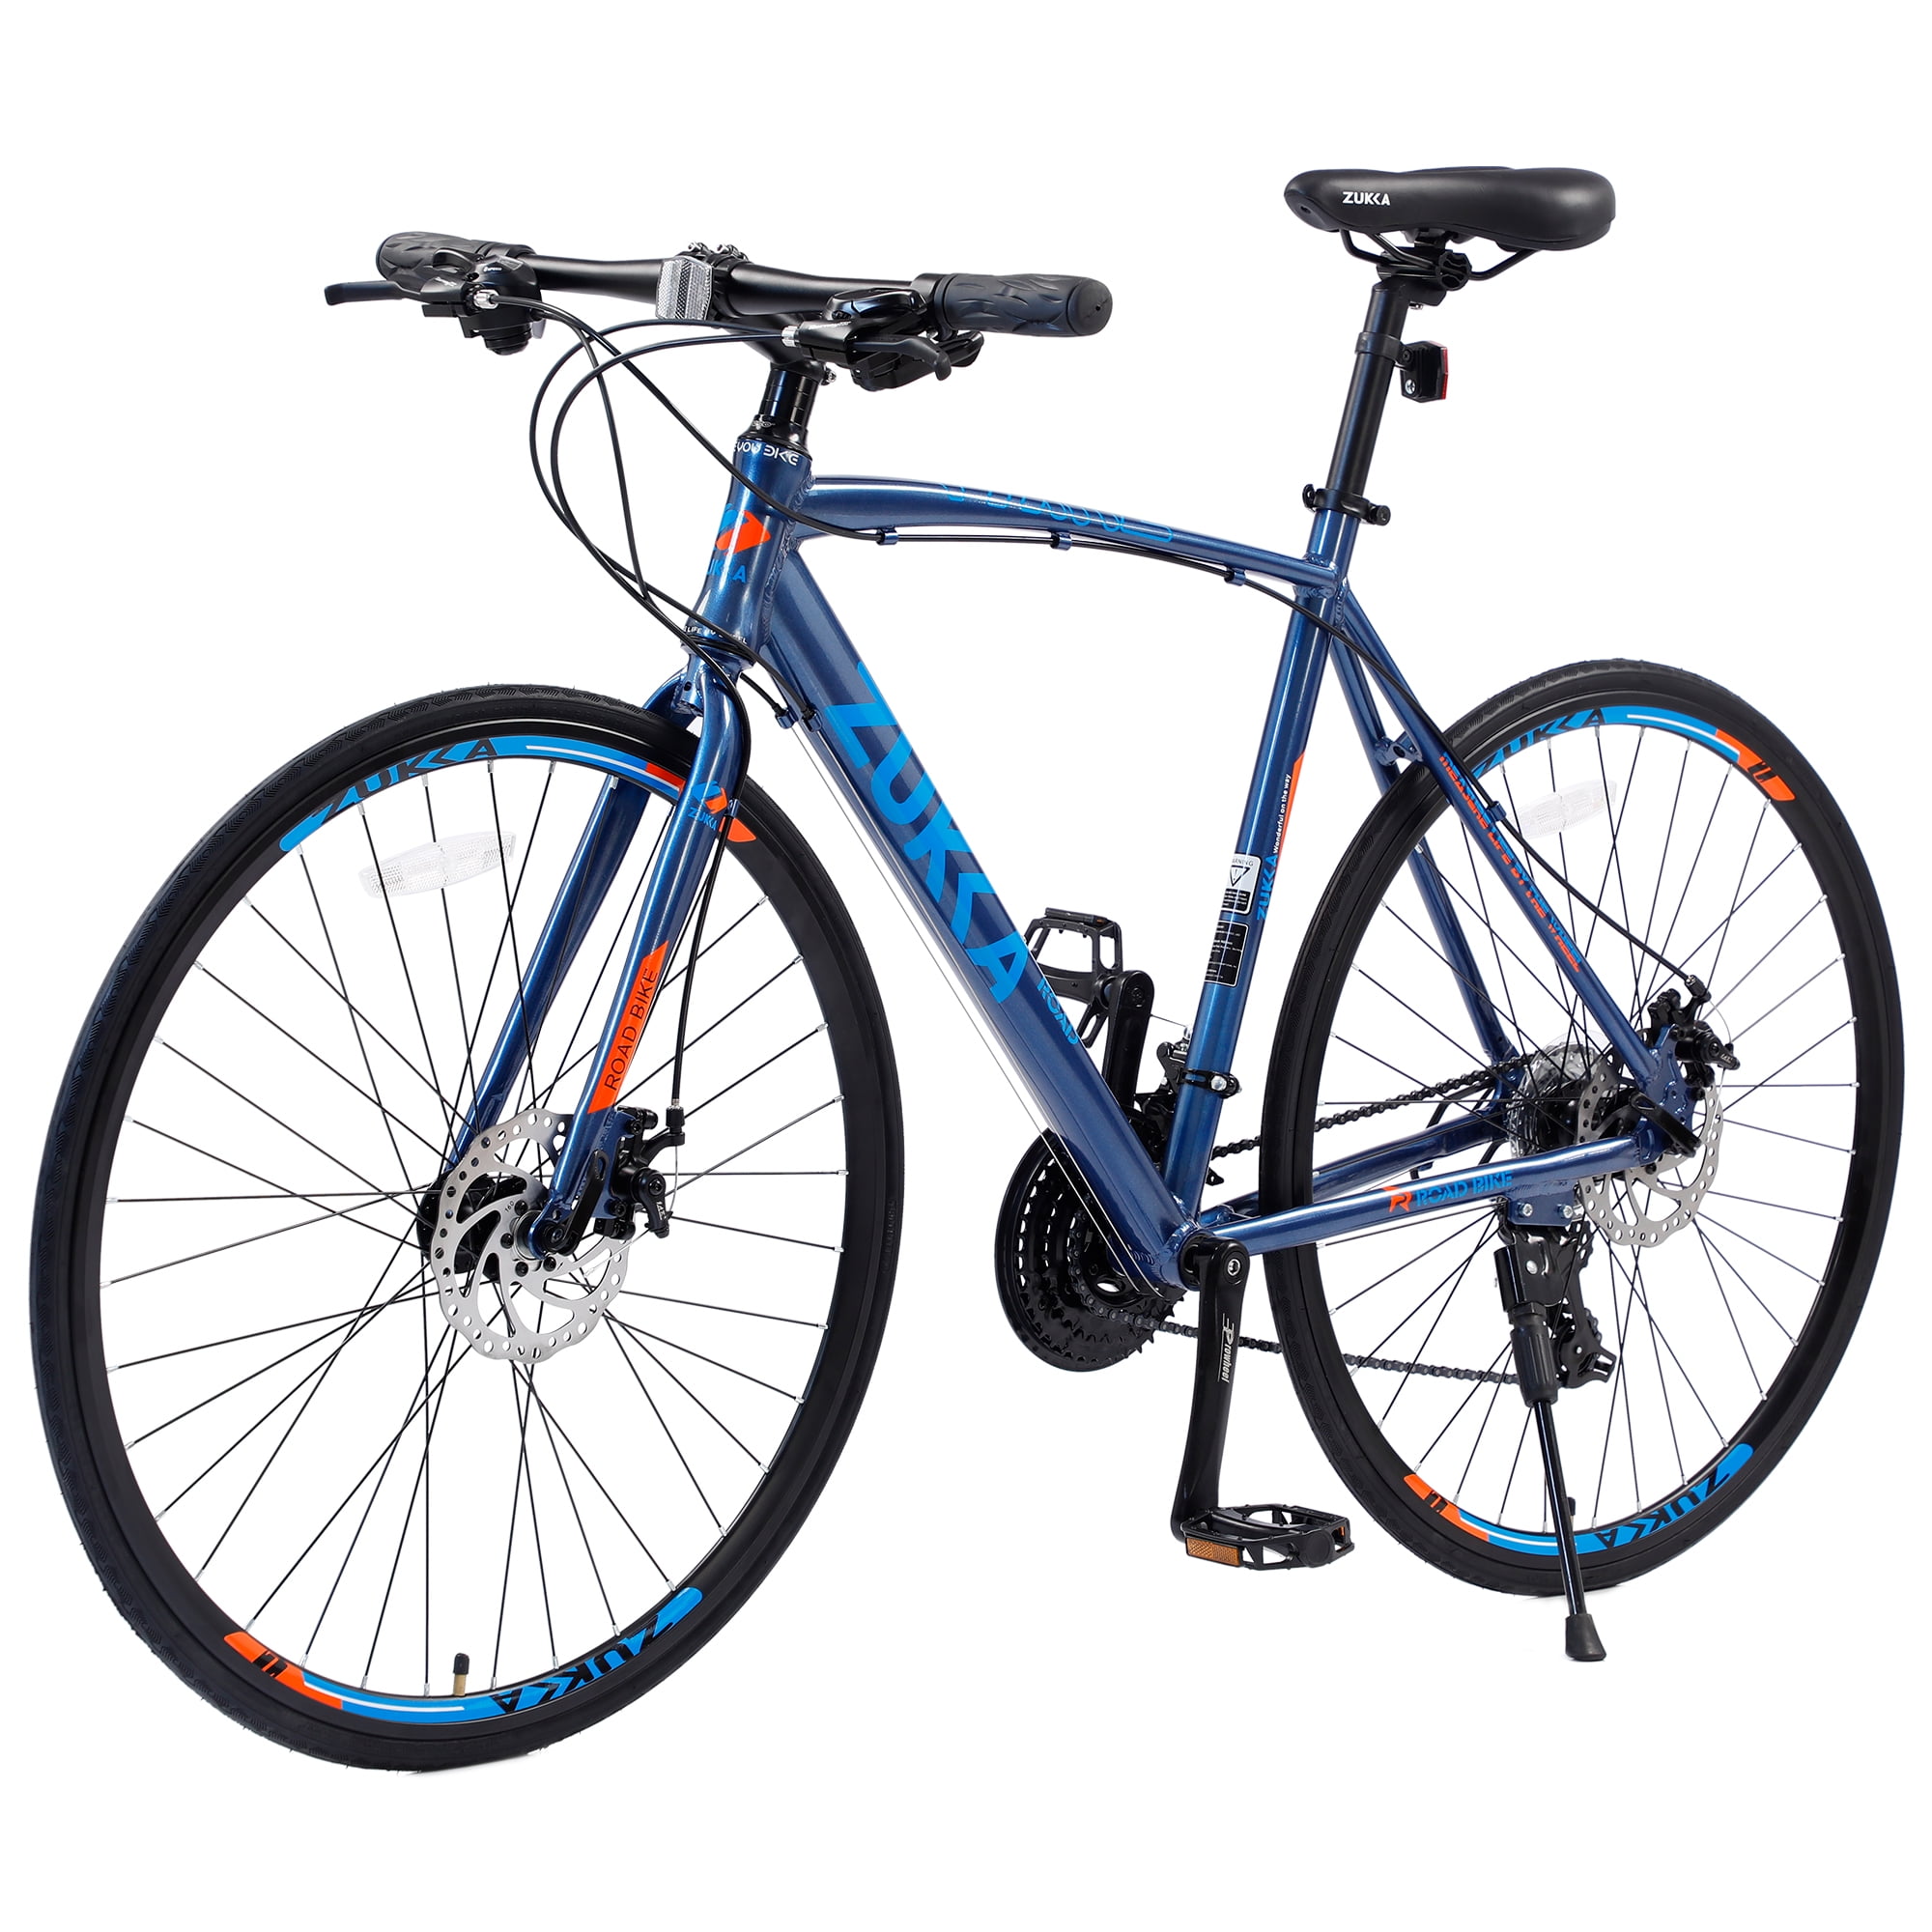 Zukka Road Bike 700C 24 Speed Aluminum Alloy Frame Bicycle for Unisex Adult Deep Blue Hybrid Bike - image 1 of 7